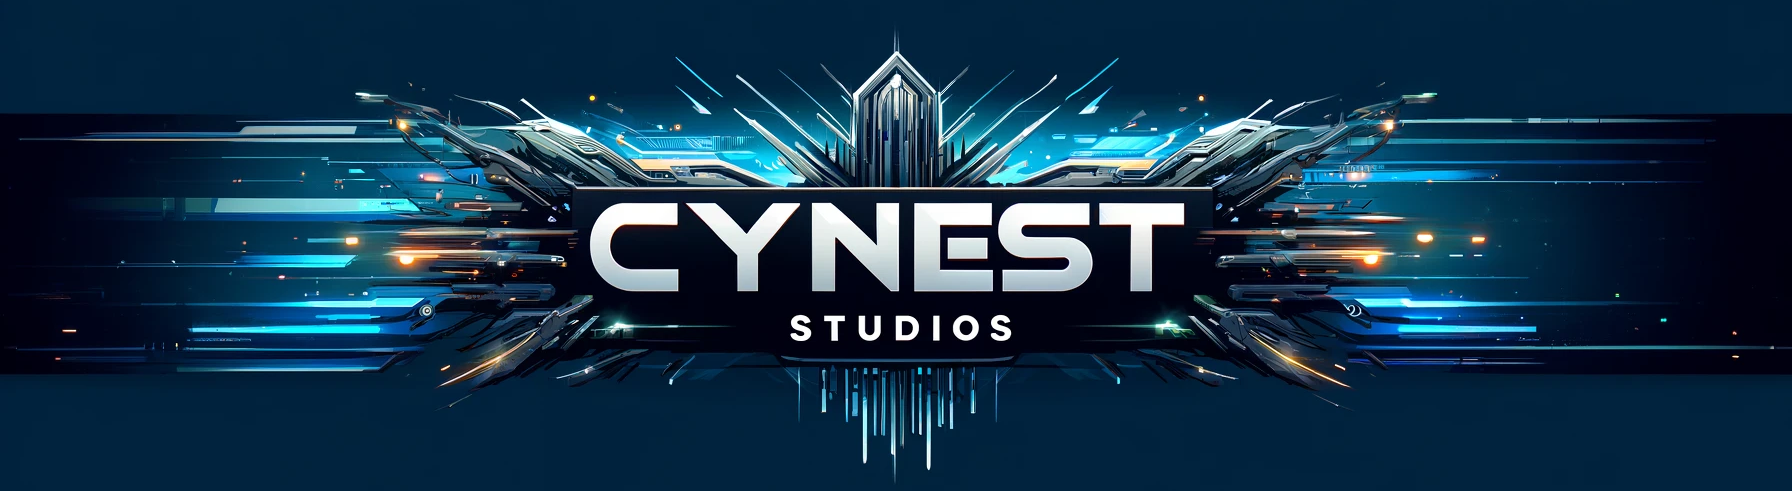 Cynest Studios Logo